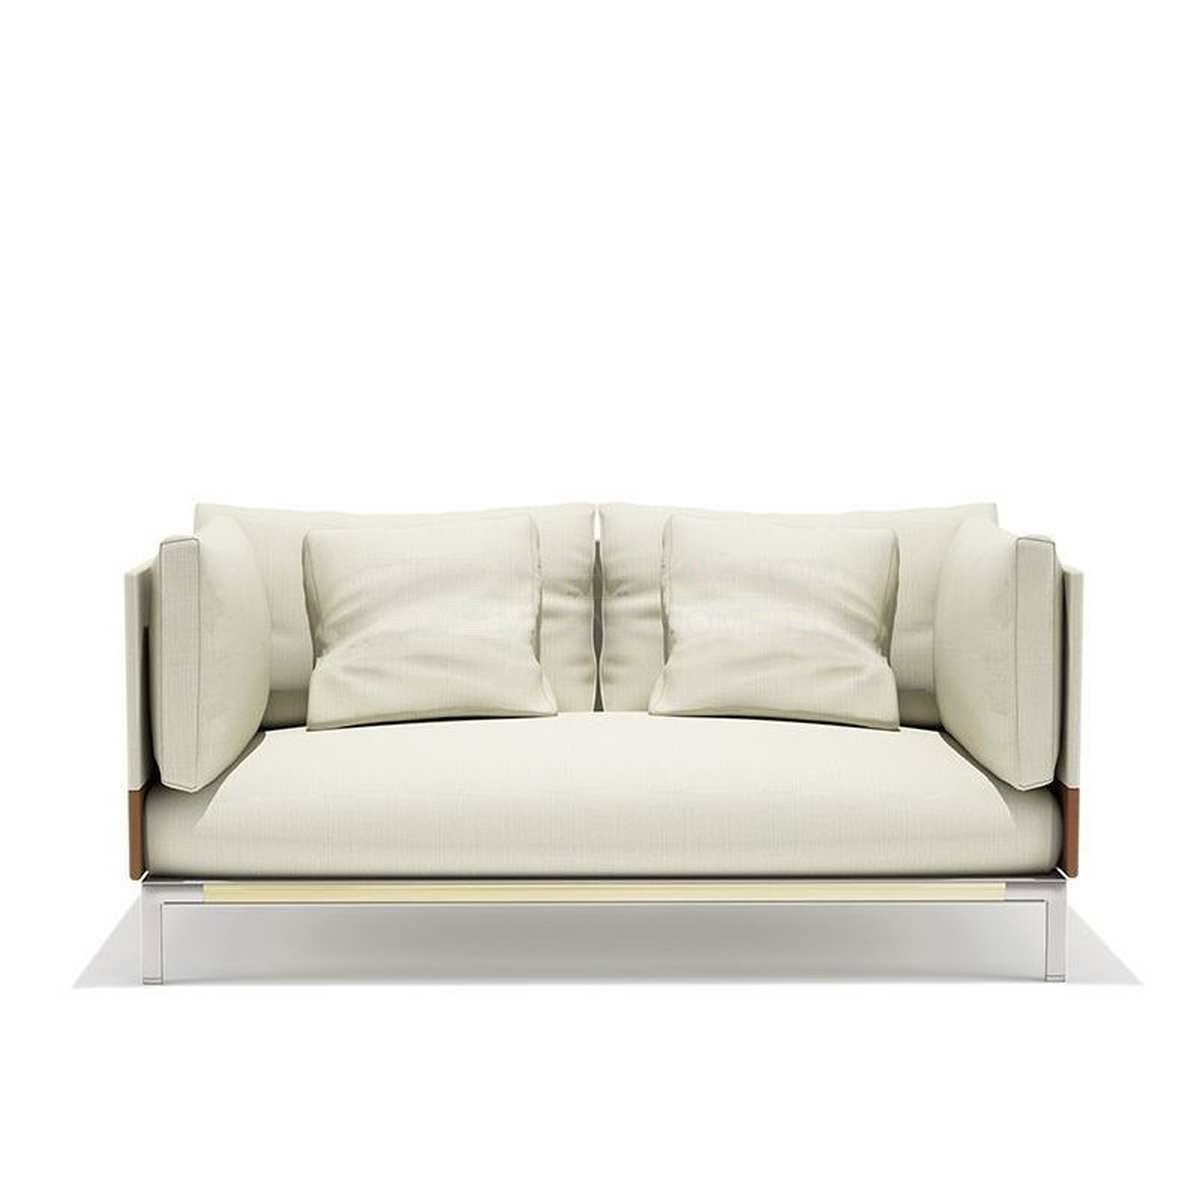 Прямой диван Baia 2 seater sofa из Италии фабрики ETHIMO